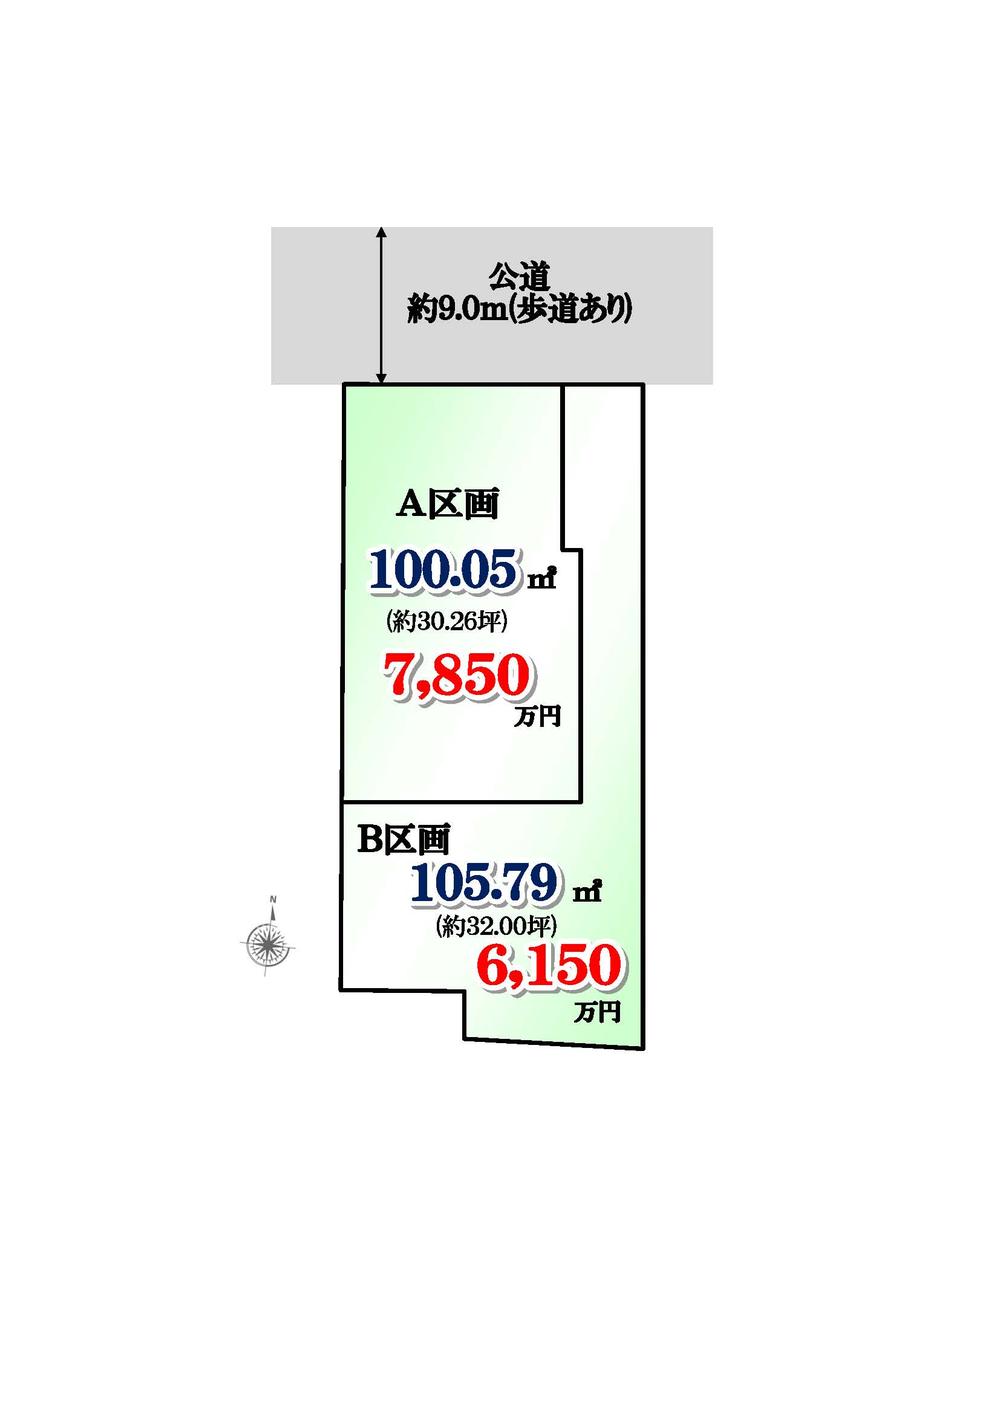 Compartment figure. Land price 78,500,000 yen, Land area 100.05 sq m